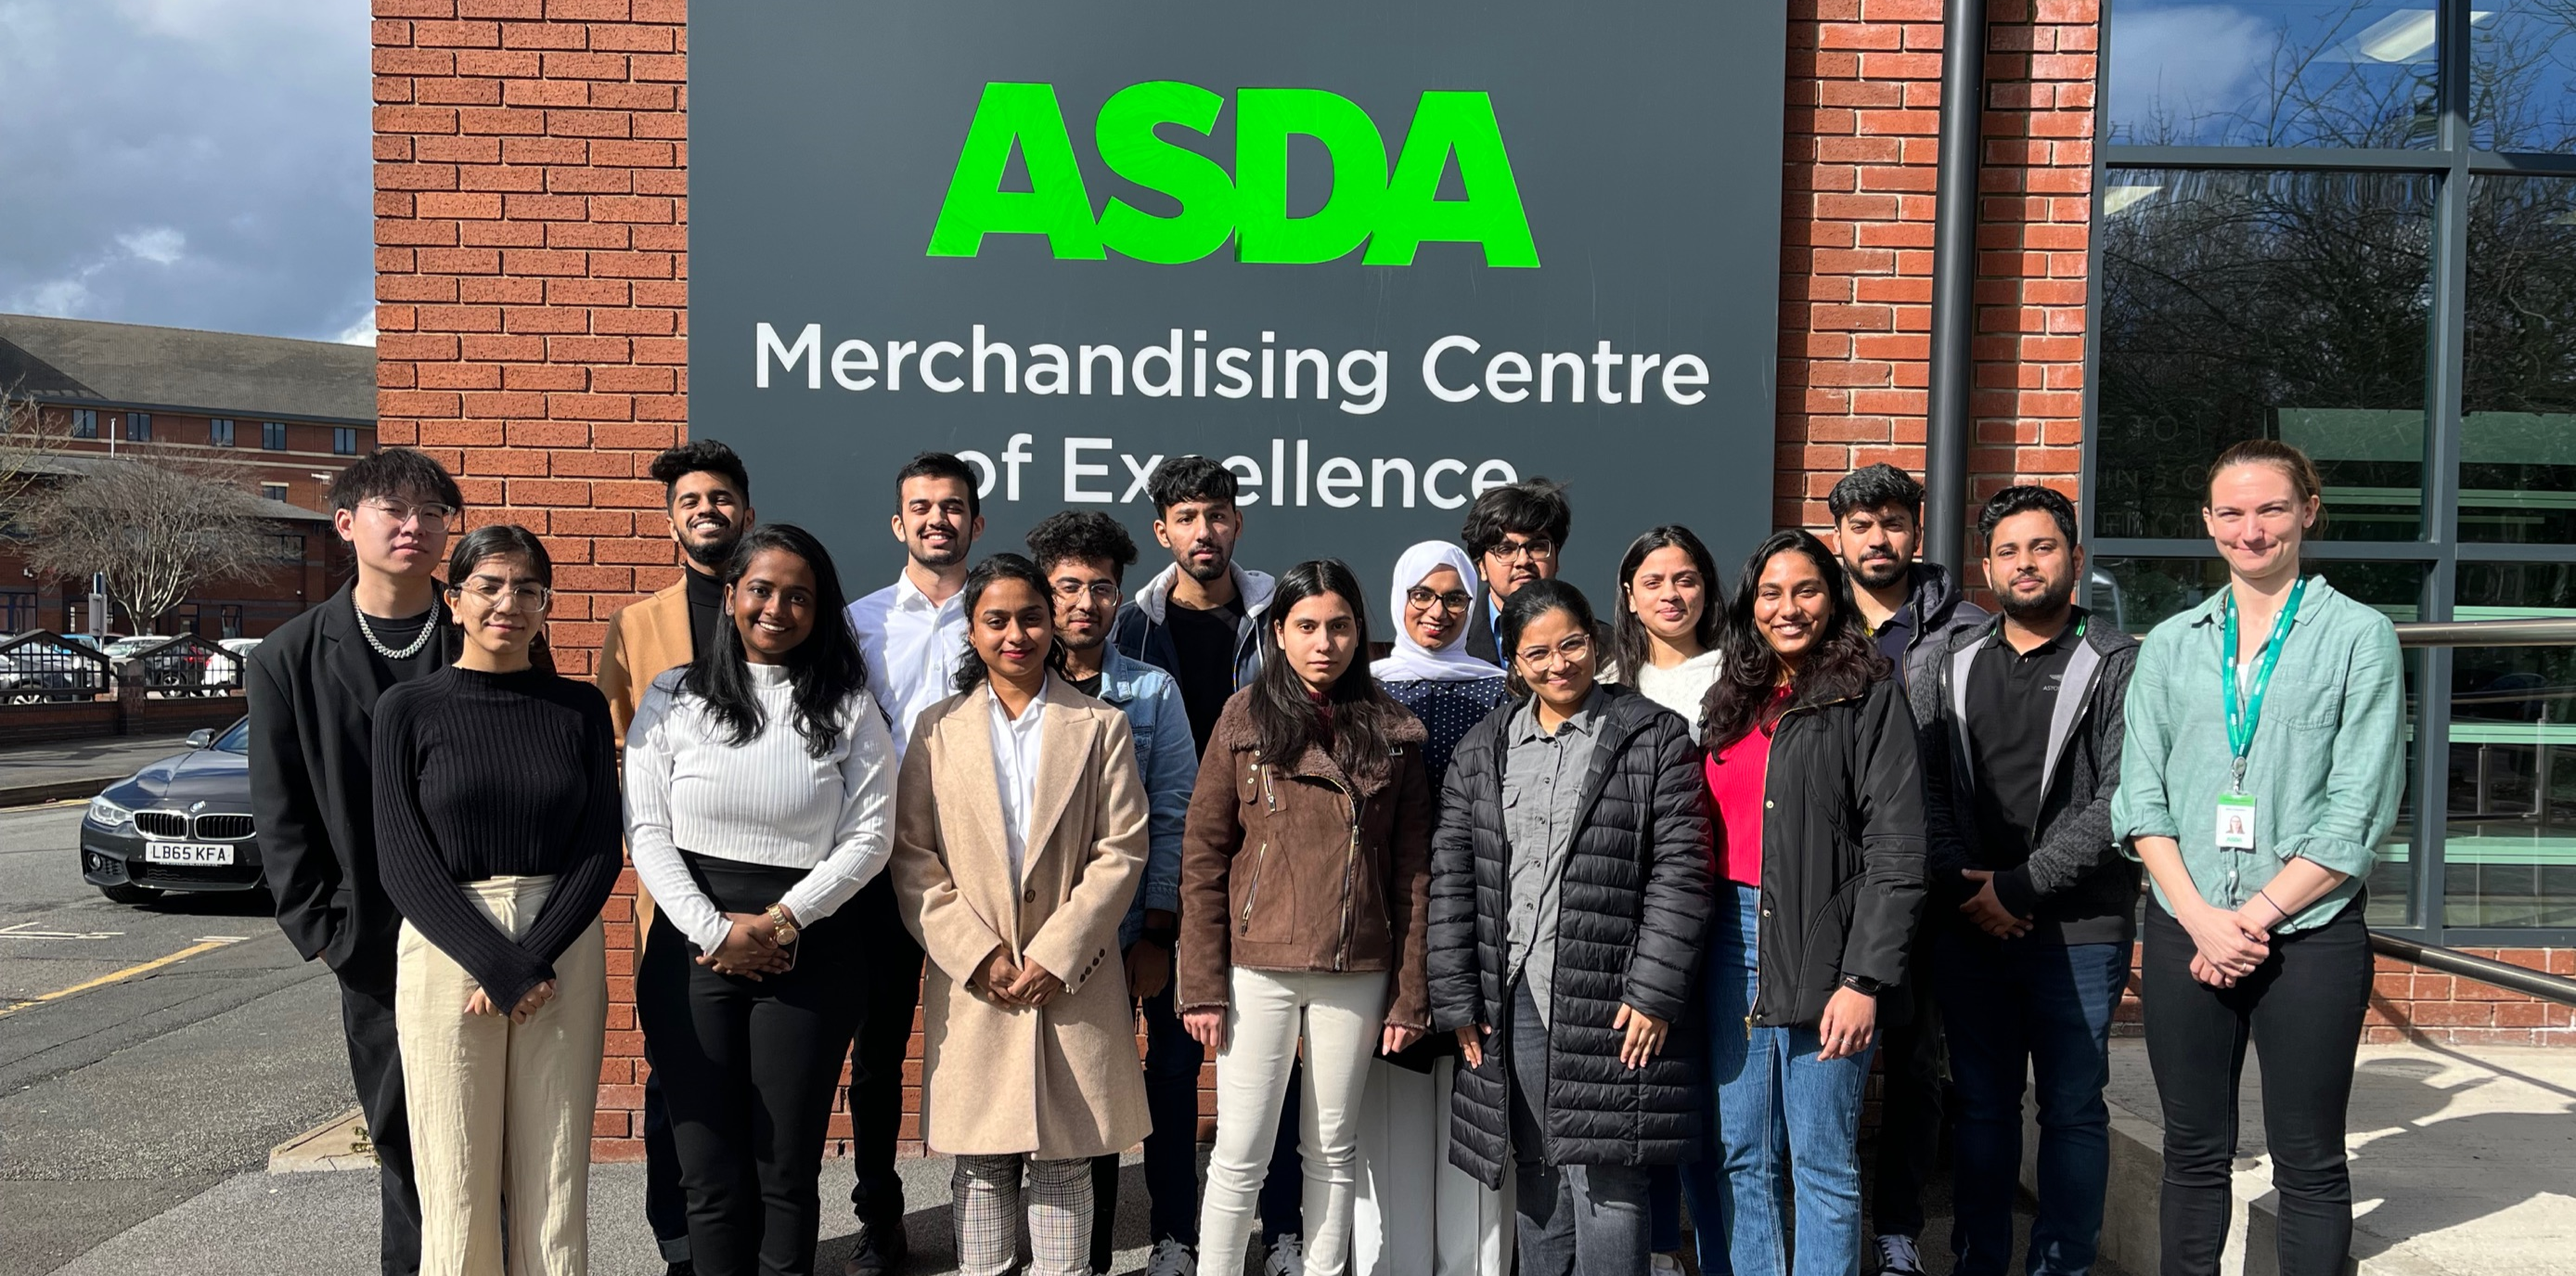 MSc management students visit ASDA Merchandising Centre of Excellence